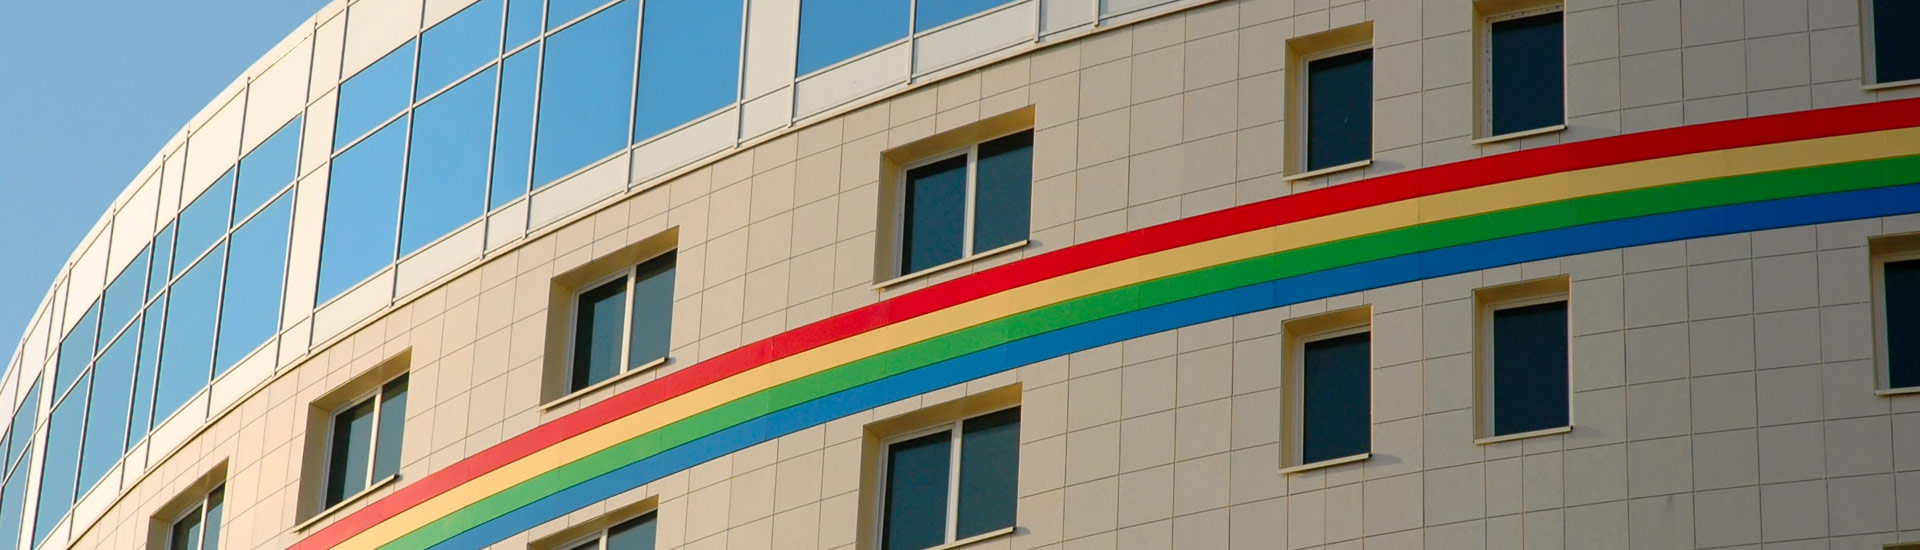 Rainbow on building